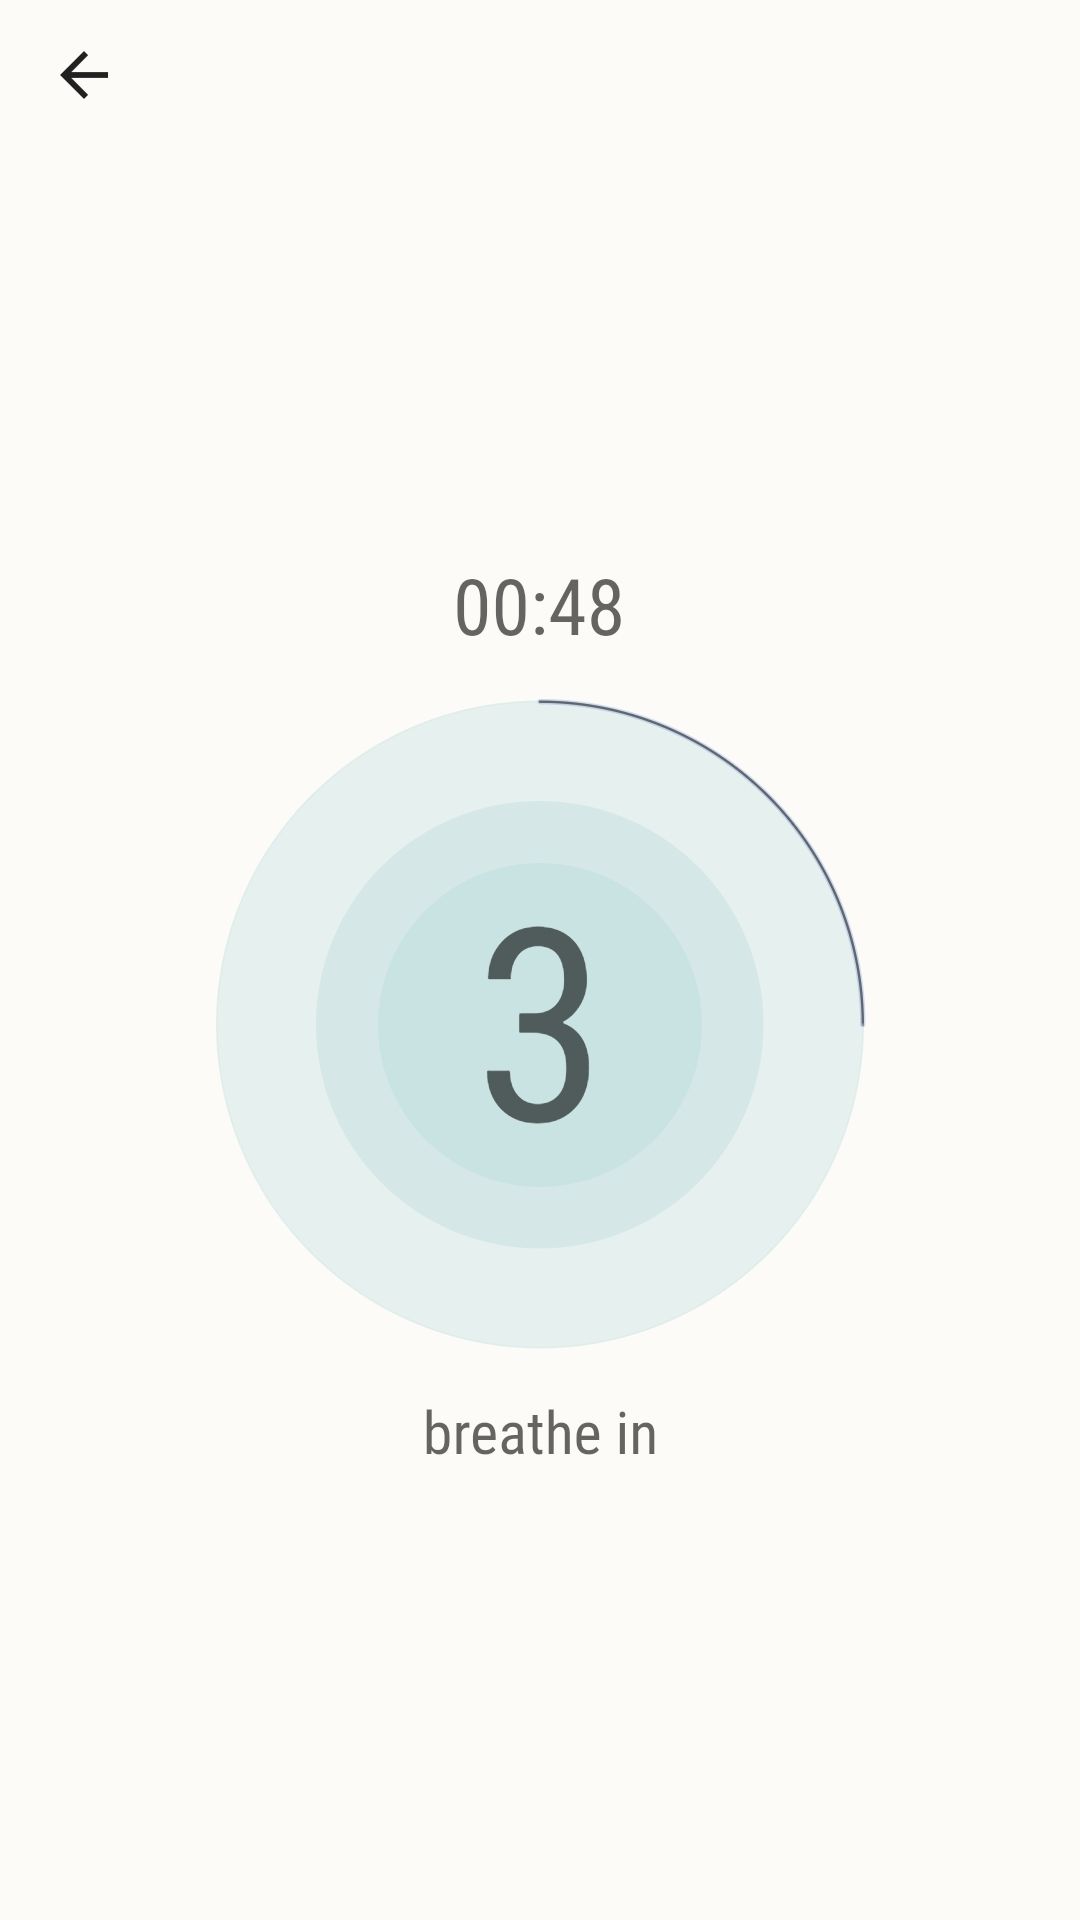 Breathe breathwork mobile app